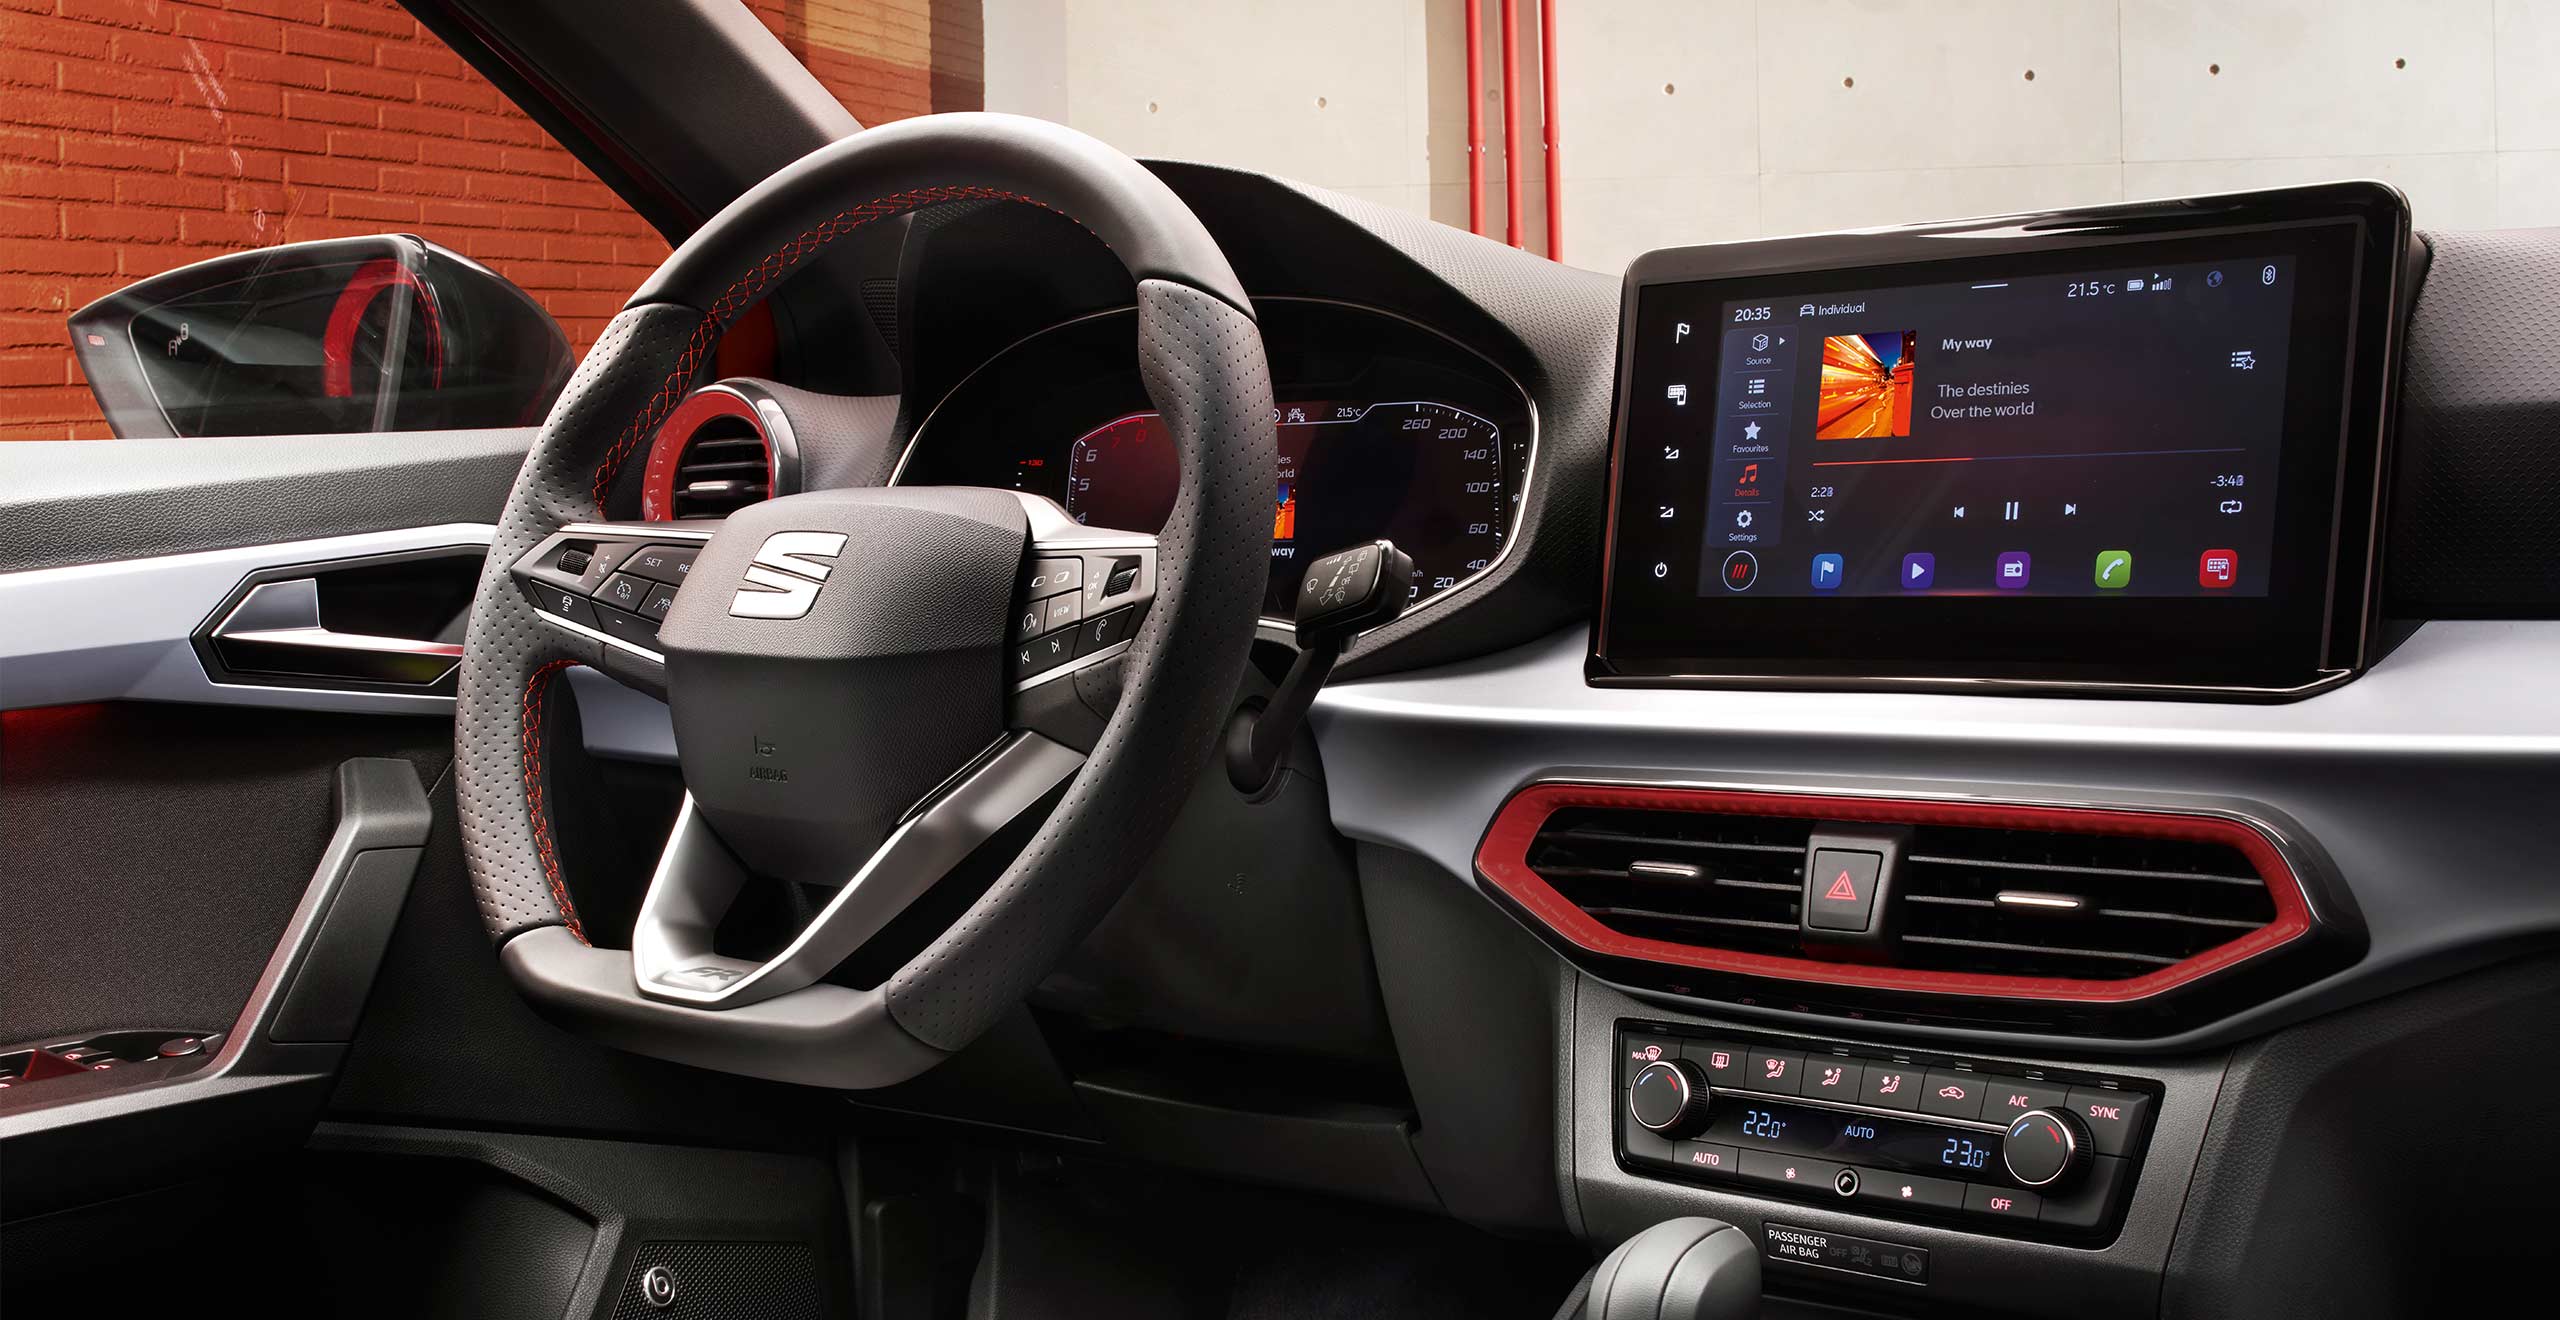 SEAT Ibiza, technologie et design automobiles innovants